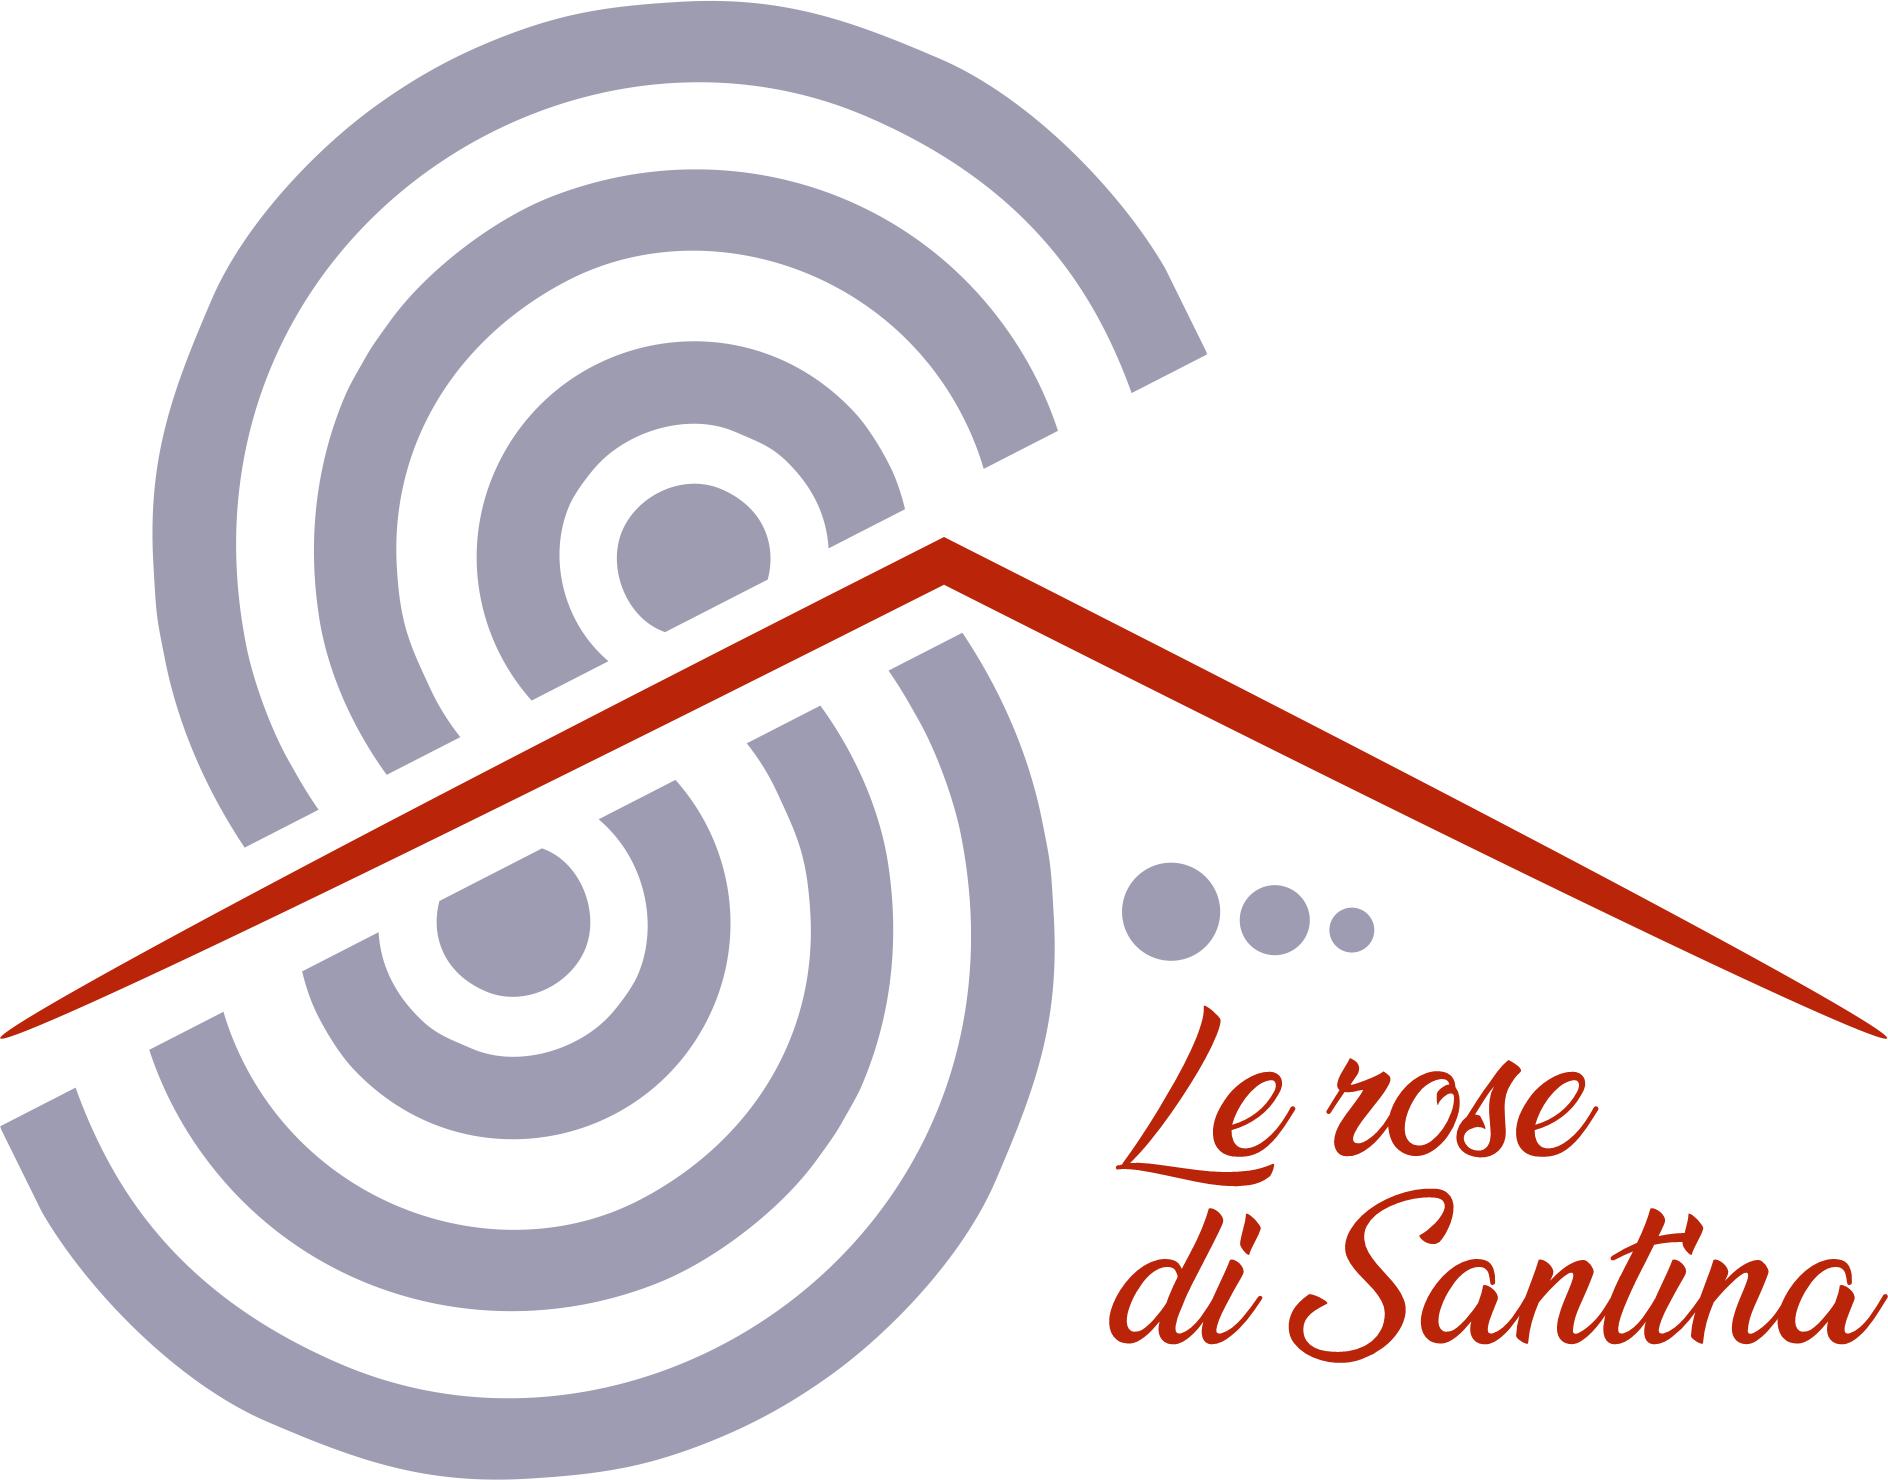 Le rose di Santina